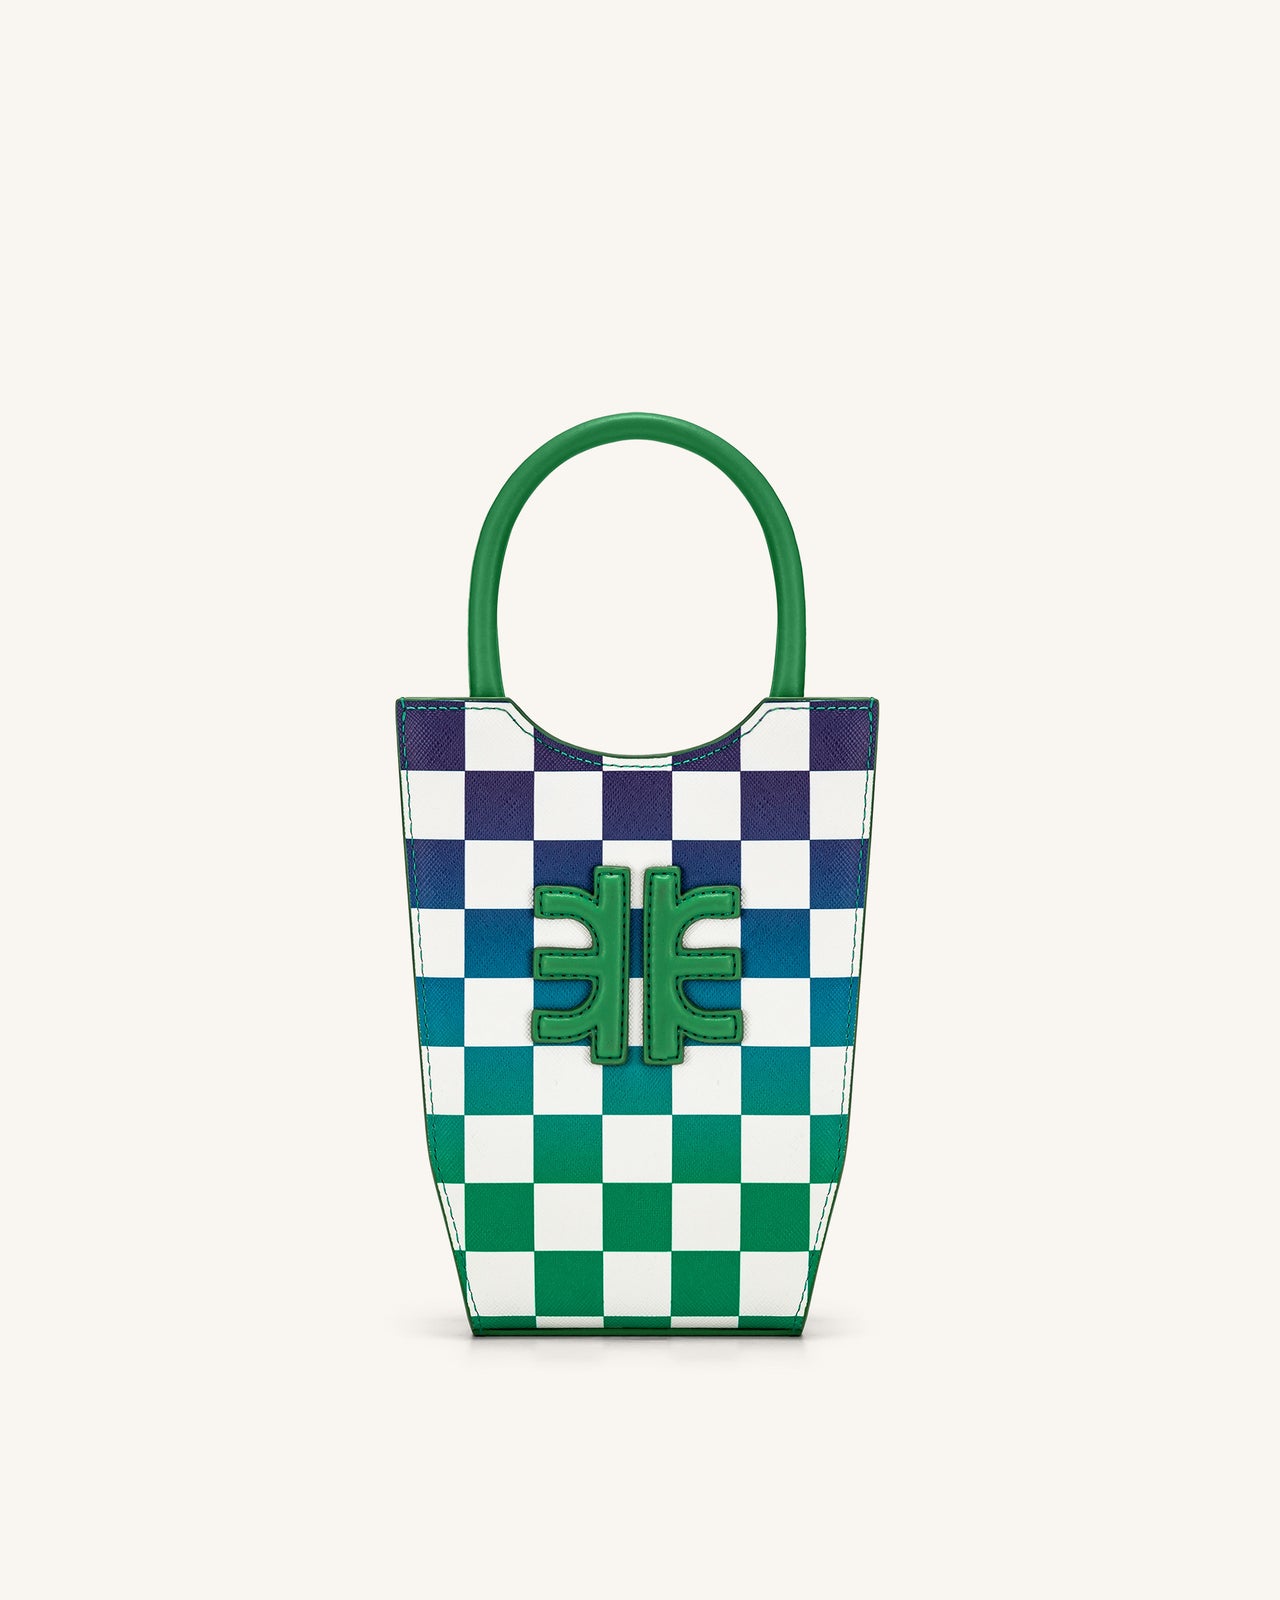 FEI Gradient Checkerboard Phone Bag - Grass Green & Dark Blue